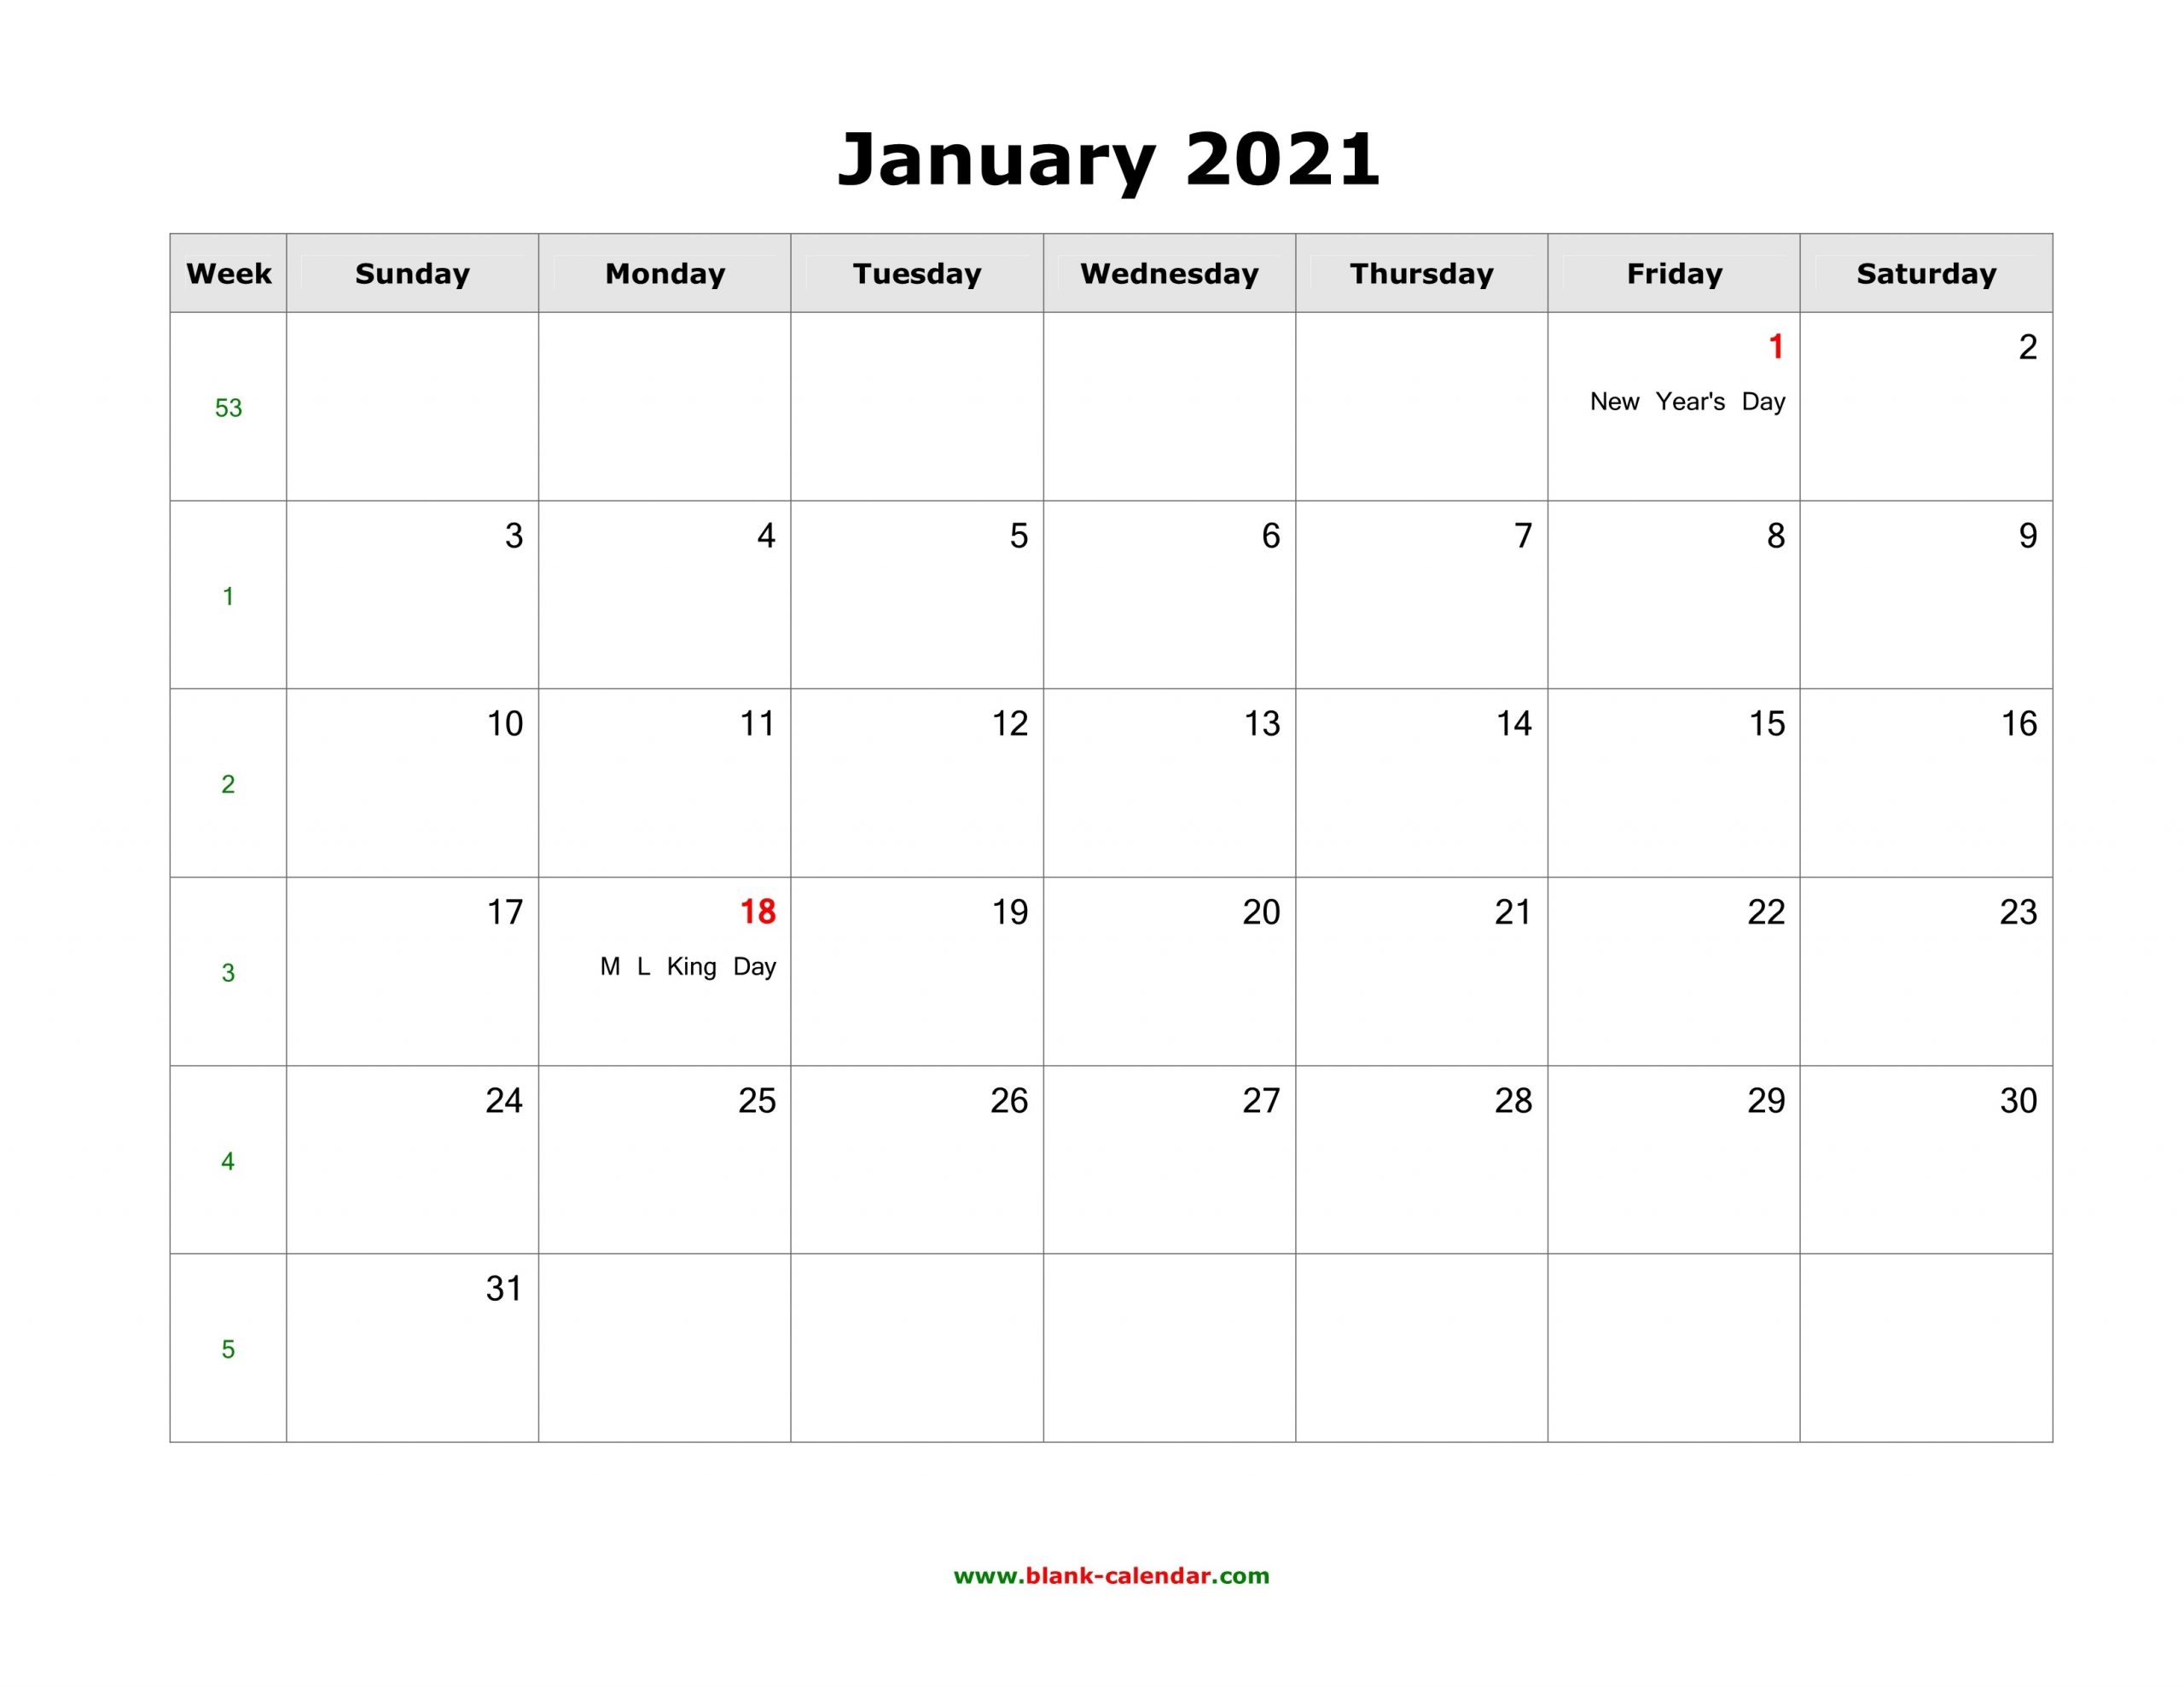 January 2021 Blank Calendar | Free Download Calendar Templates-Free Editable Calendar Template 2021 Word